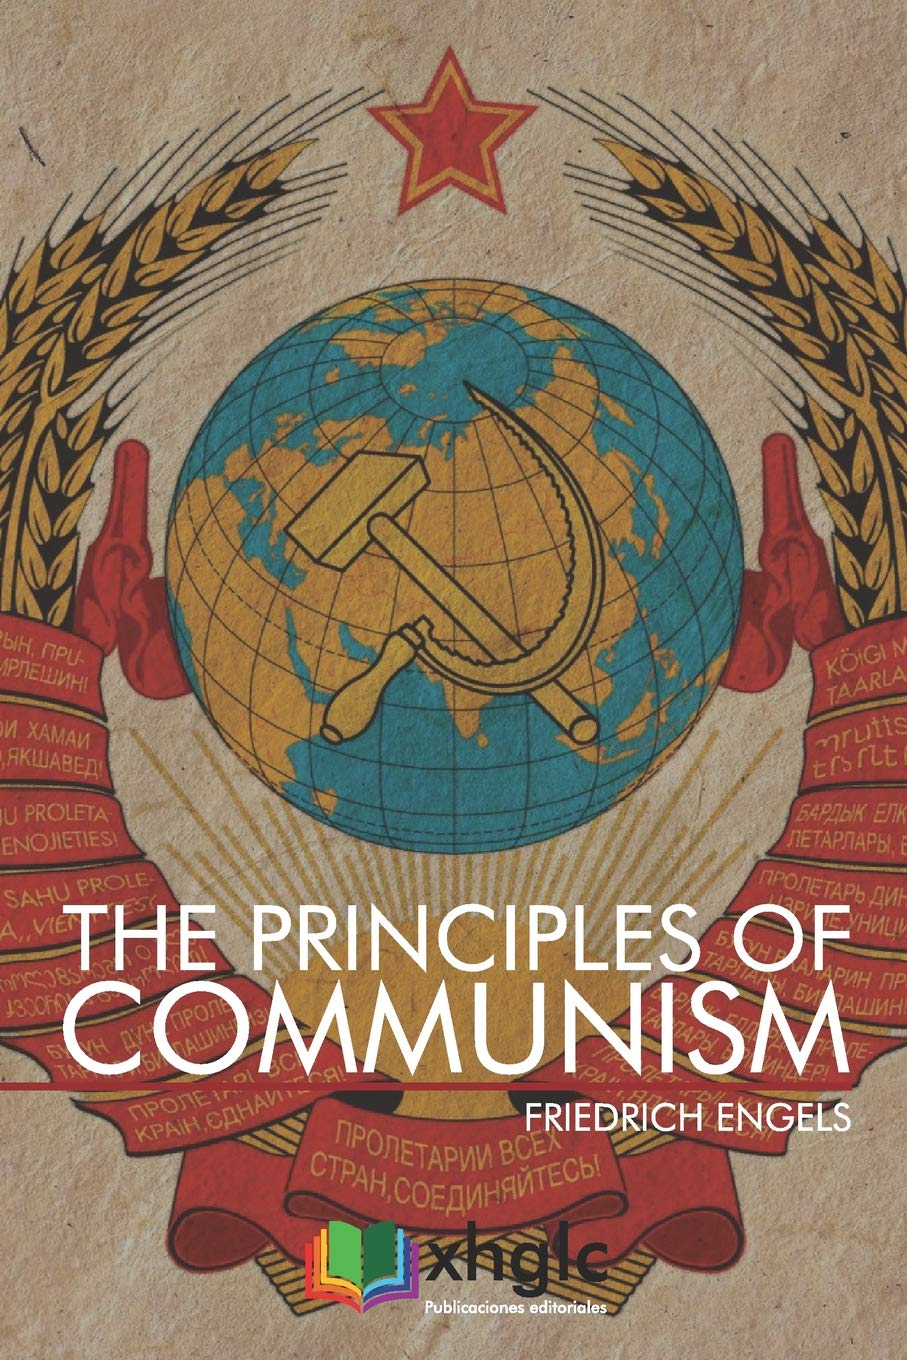 Friedrich Engels: The Principles of Communism (Paperback, 2019, XHGLC Publicaciones Editoriales)